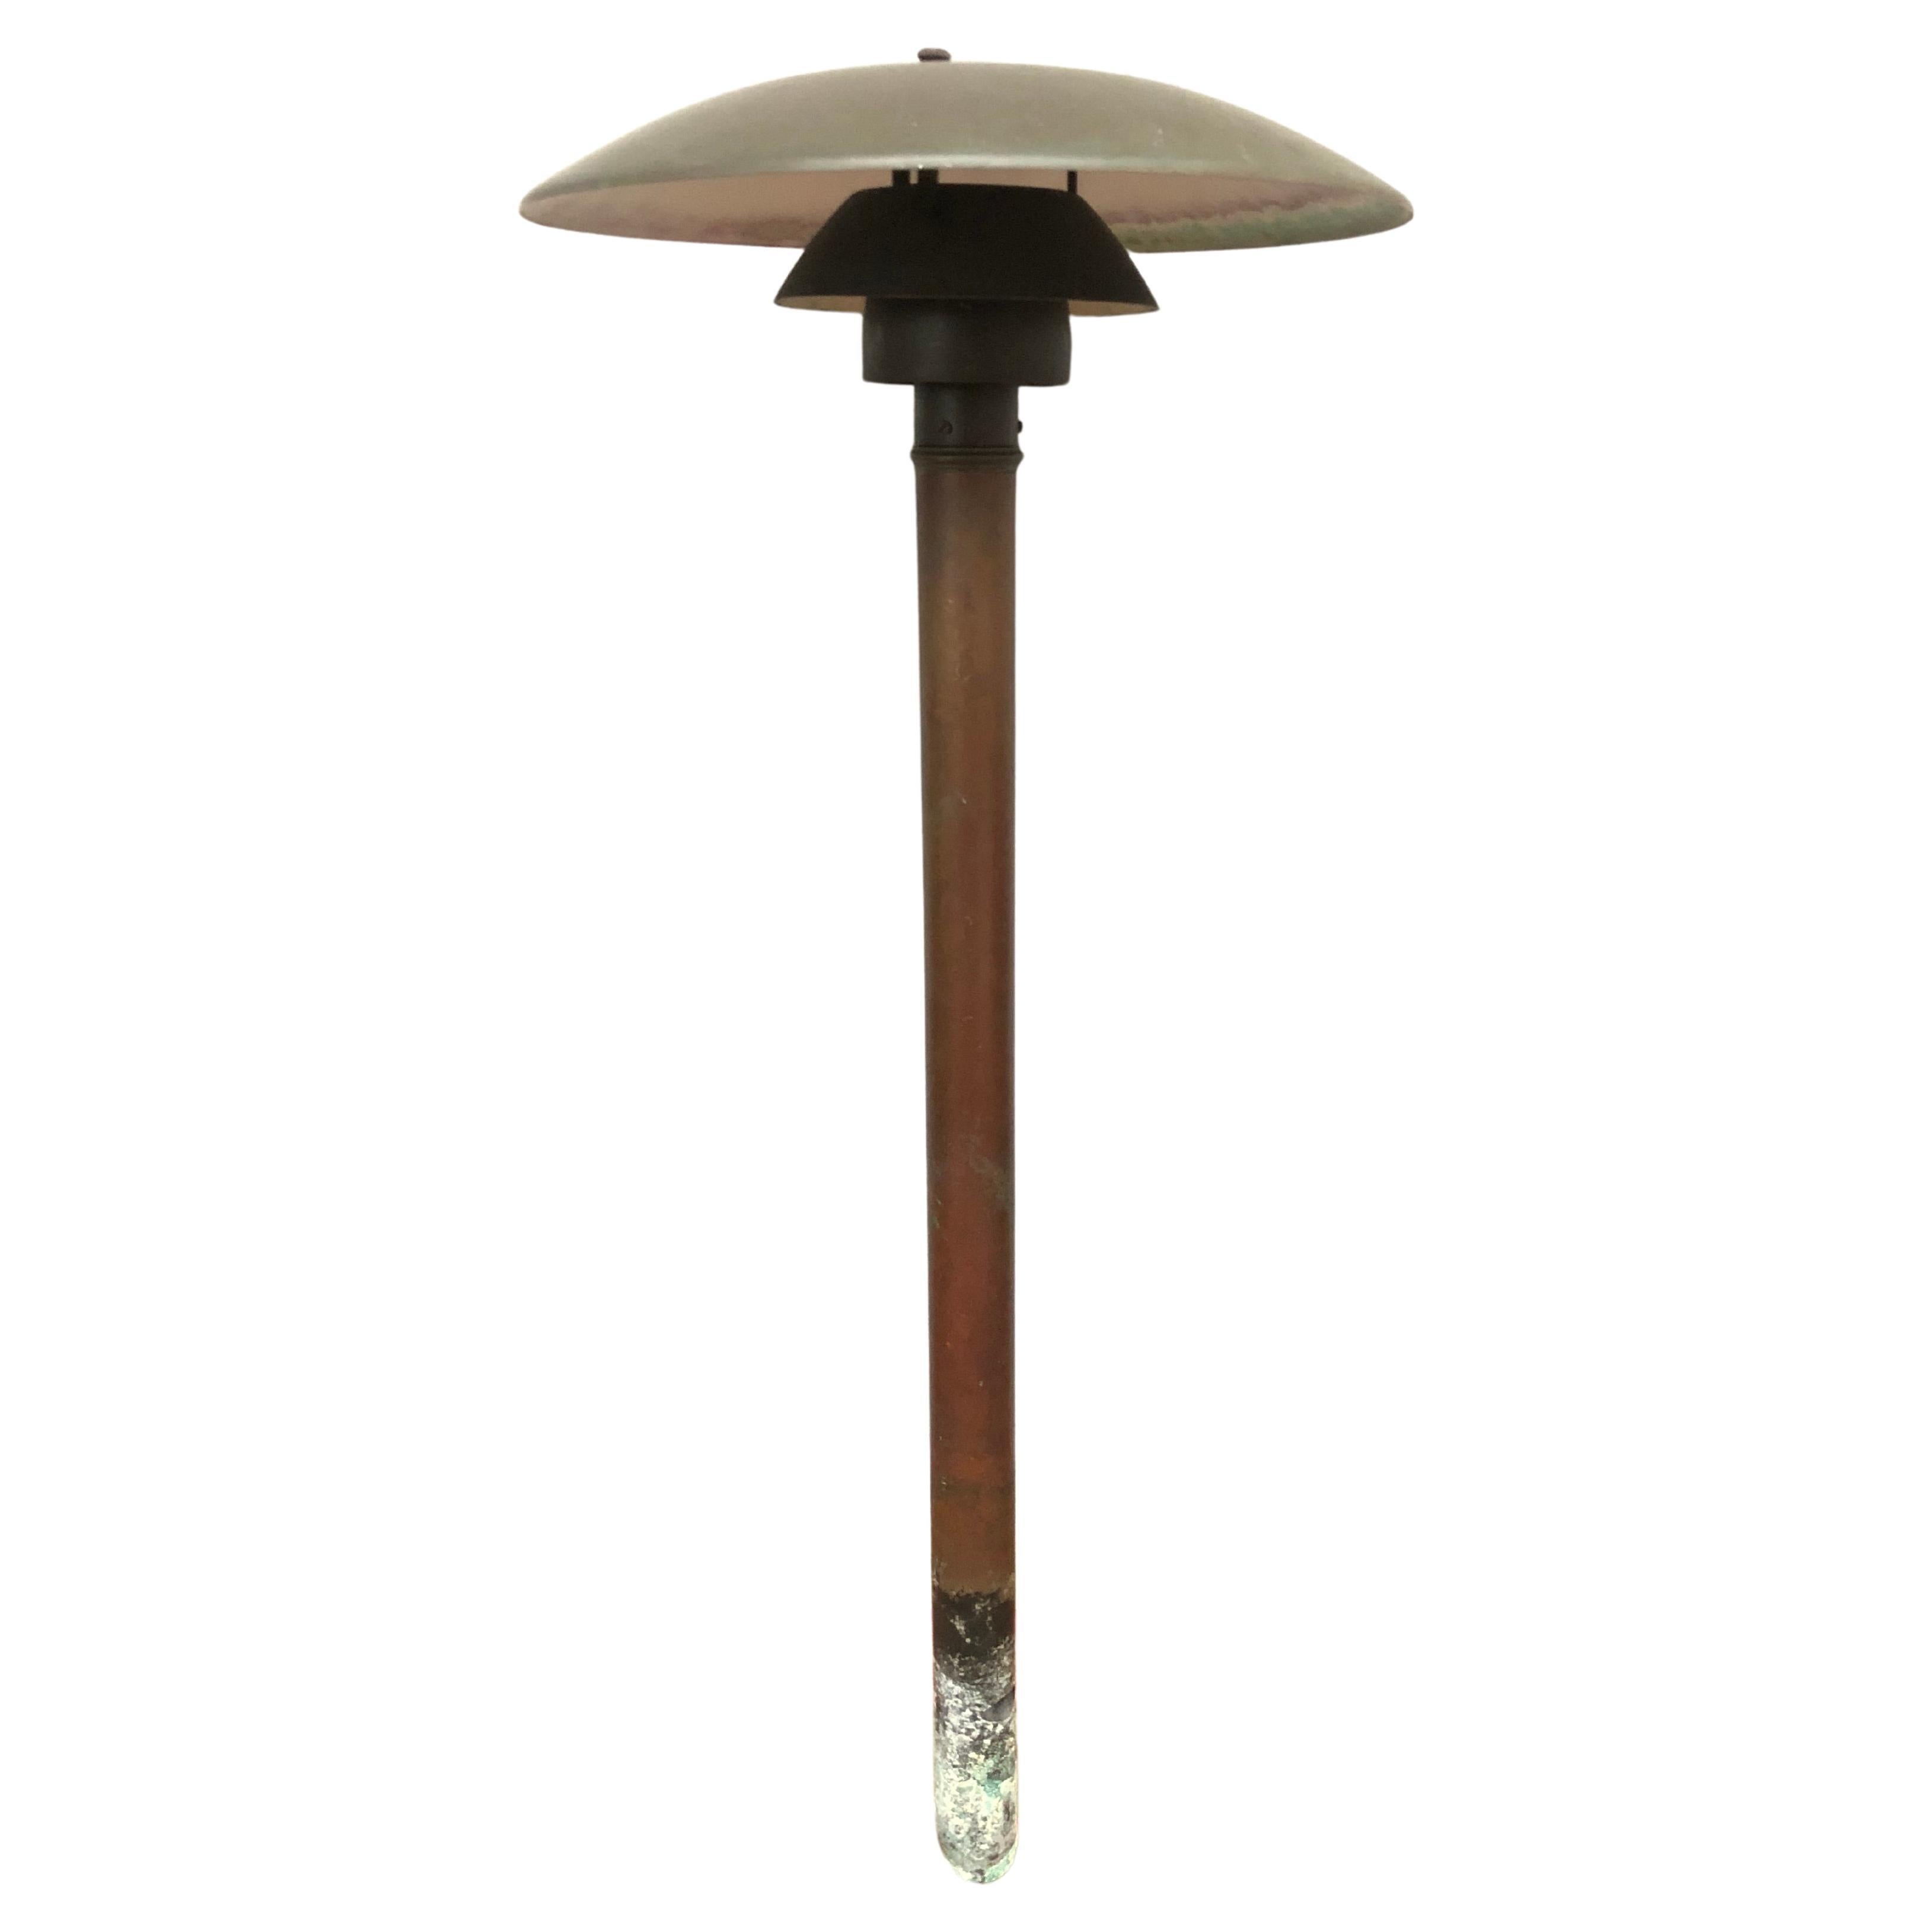 An Iconic Poul Henningsen  Garden Lamp by Louis Poulsen For Sale